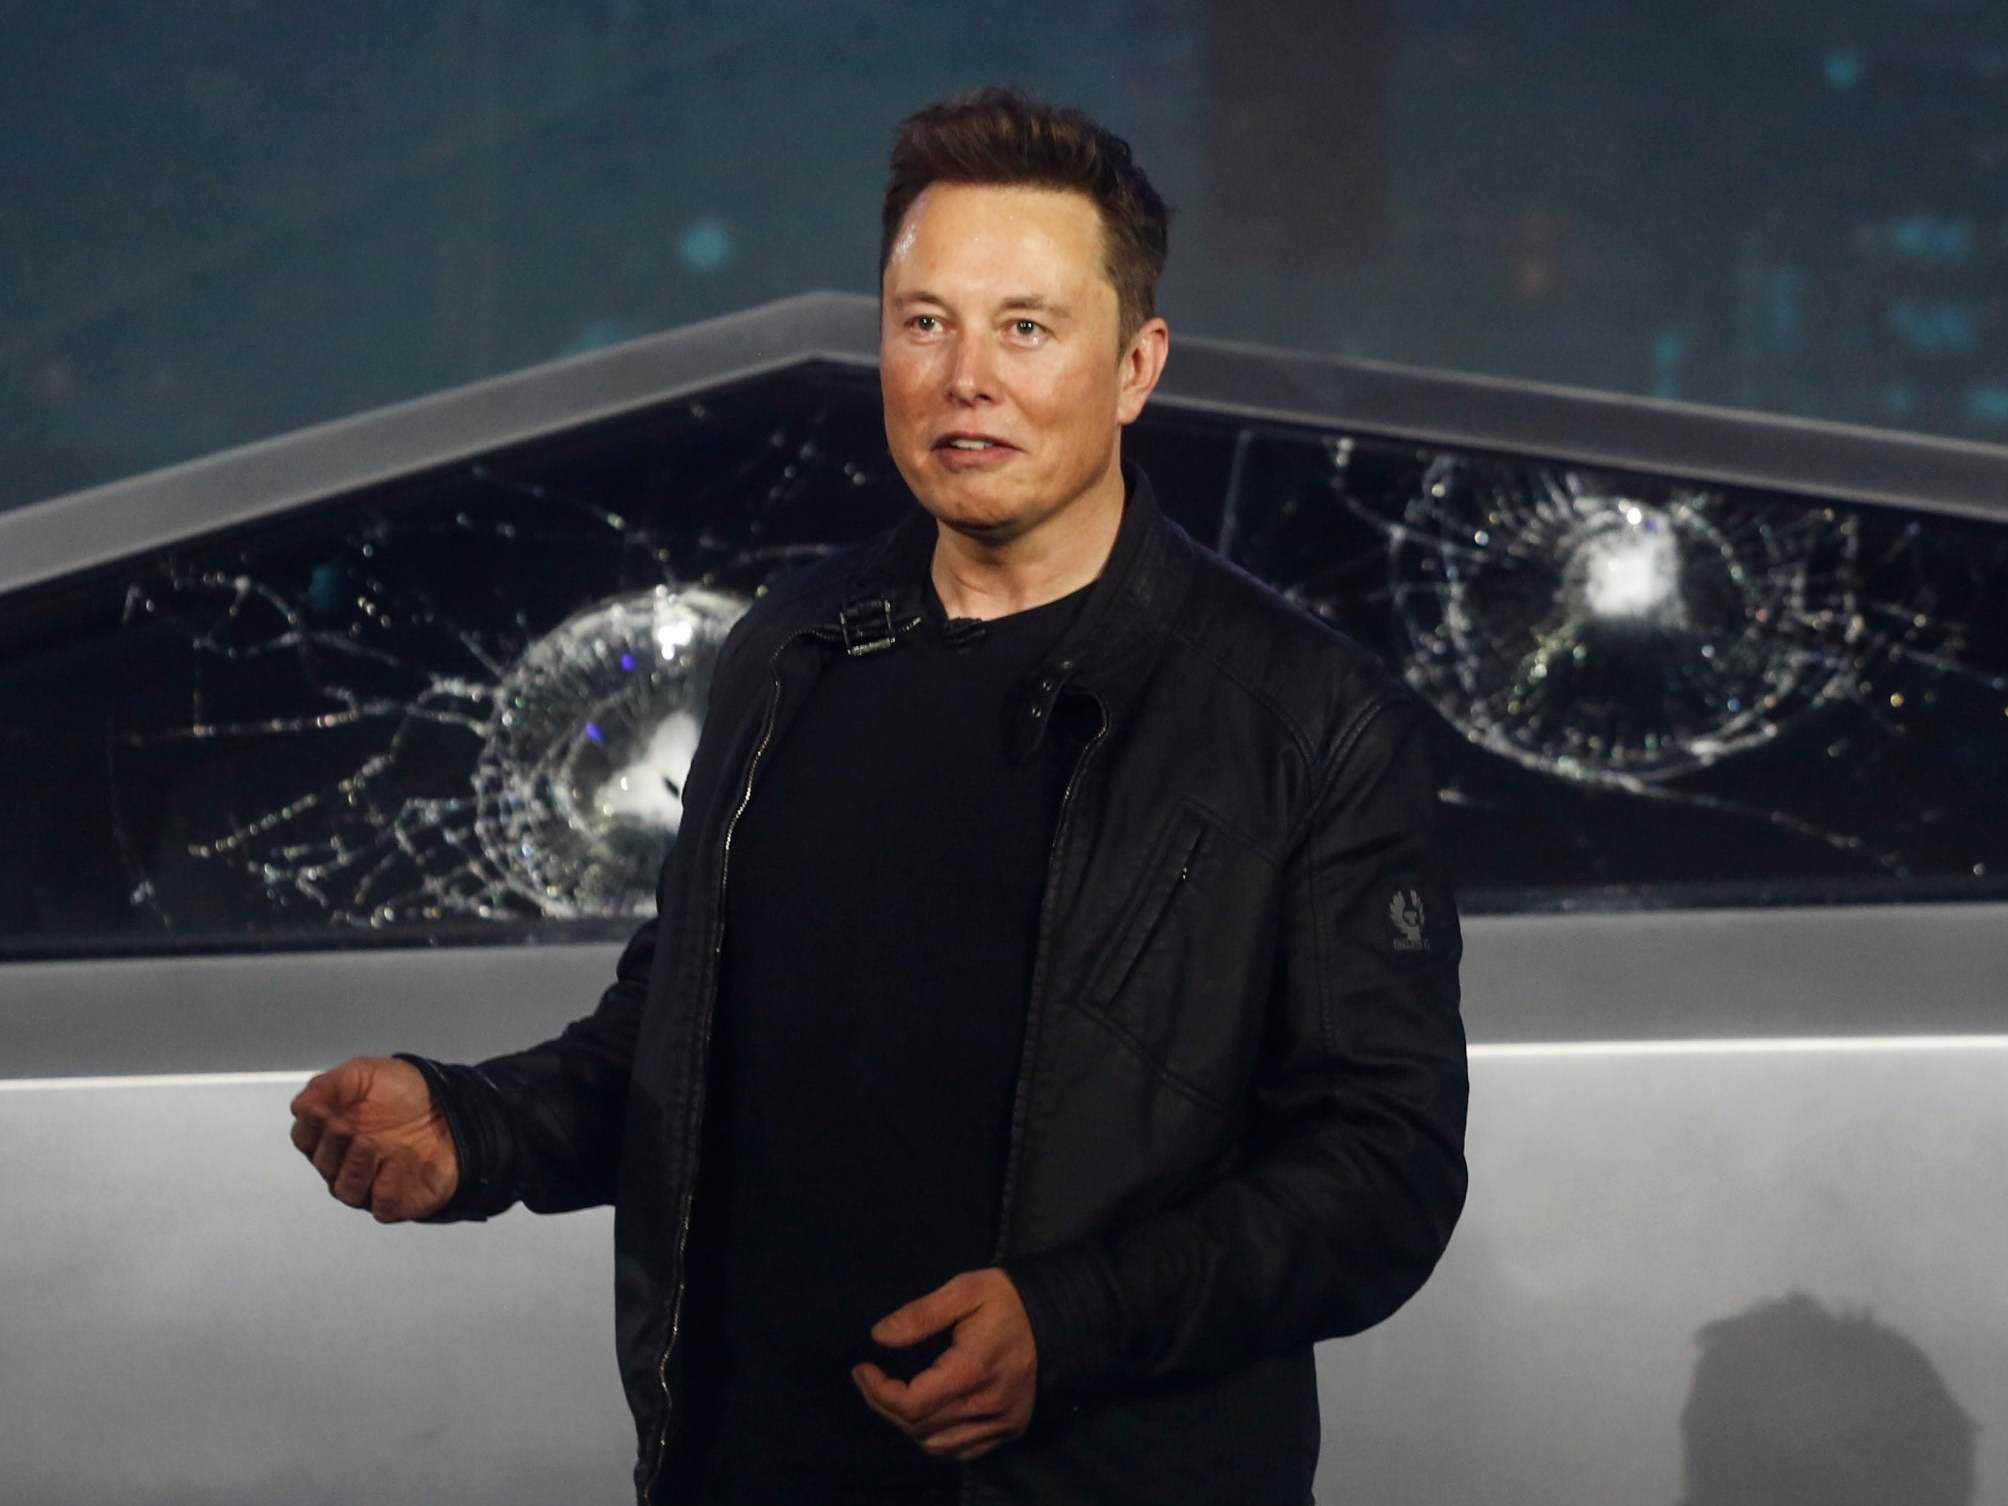 Tesla's Cybertruck got off to a rocky start